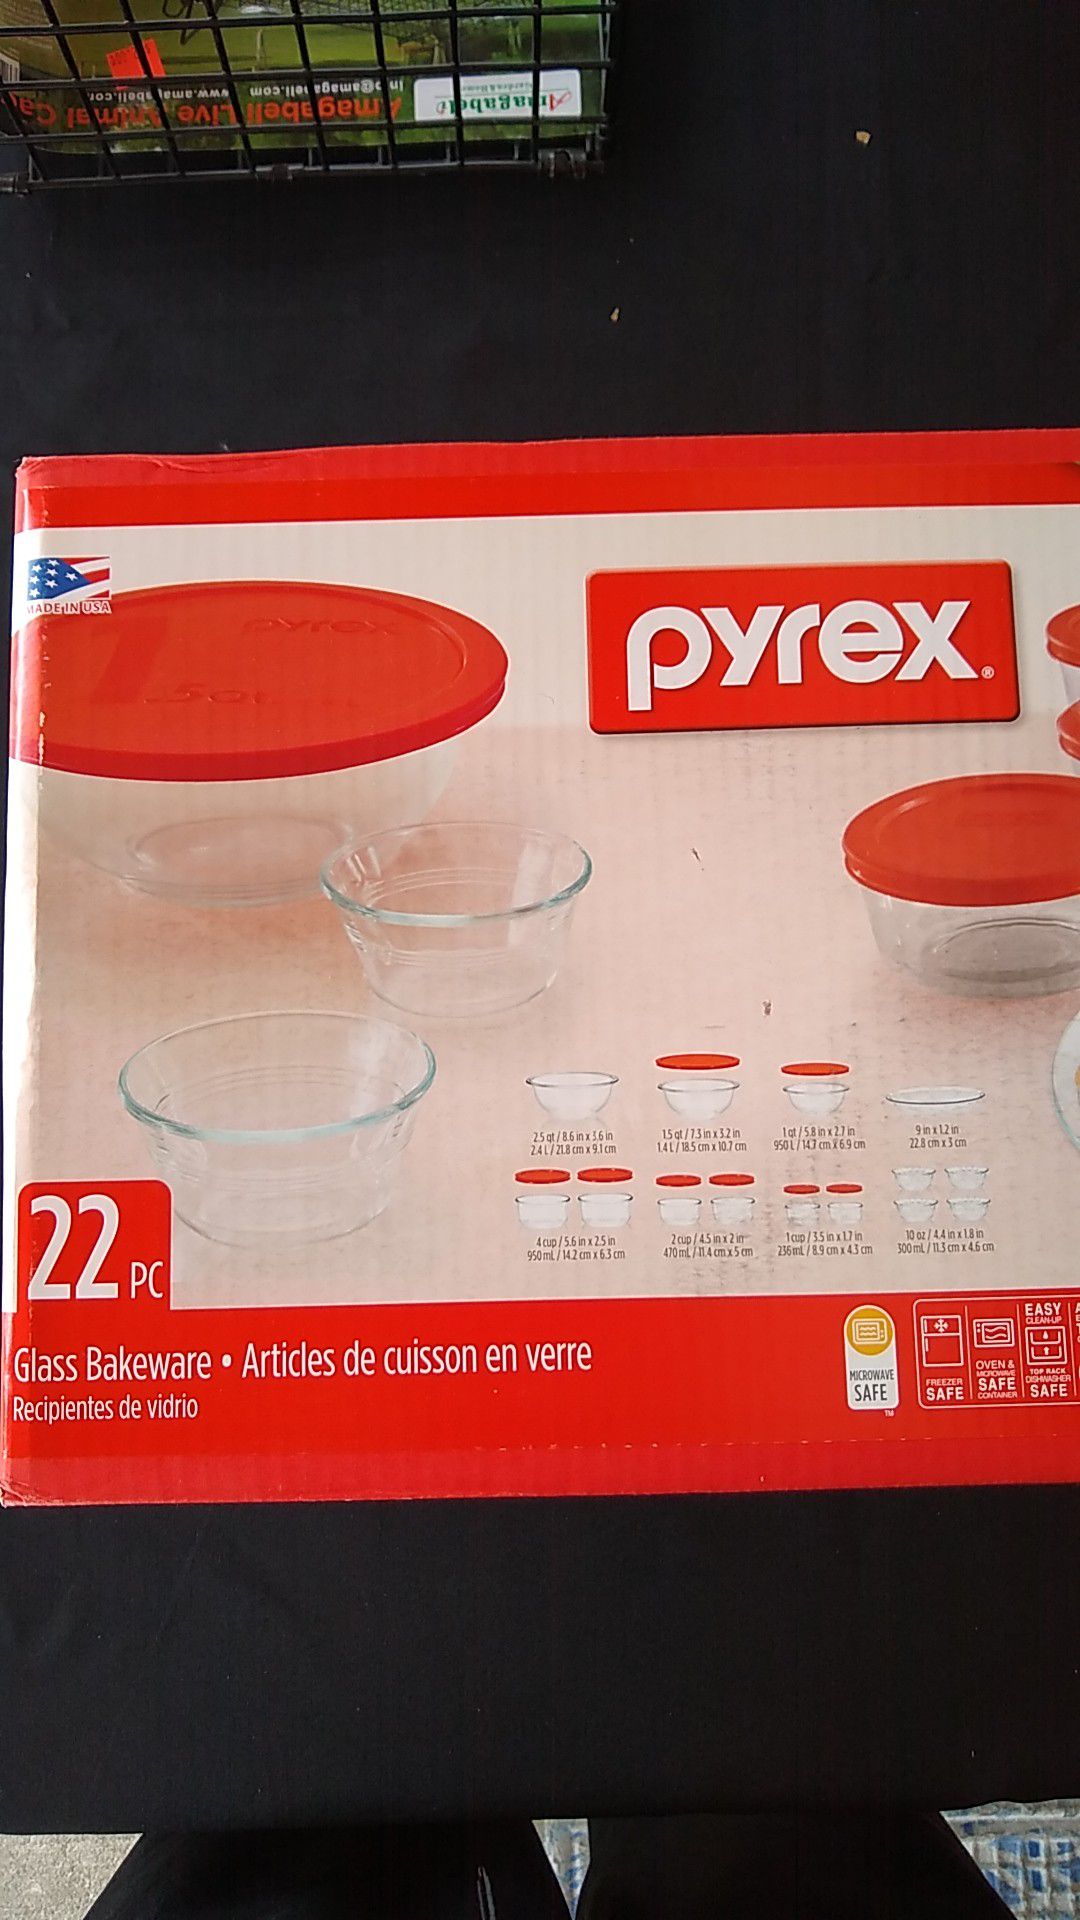 Pyrex glassware